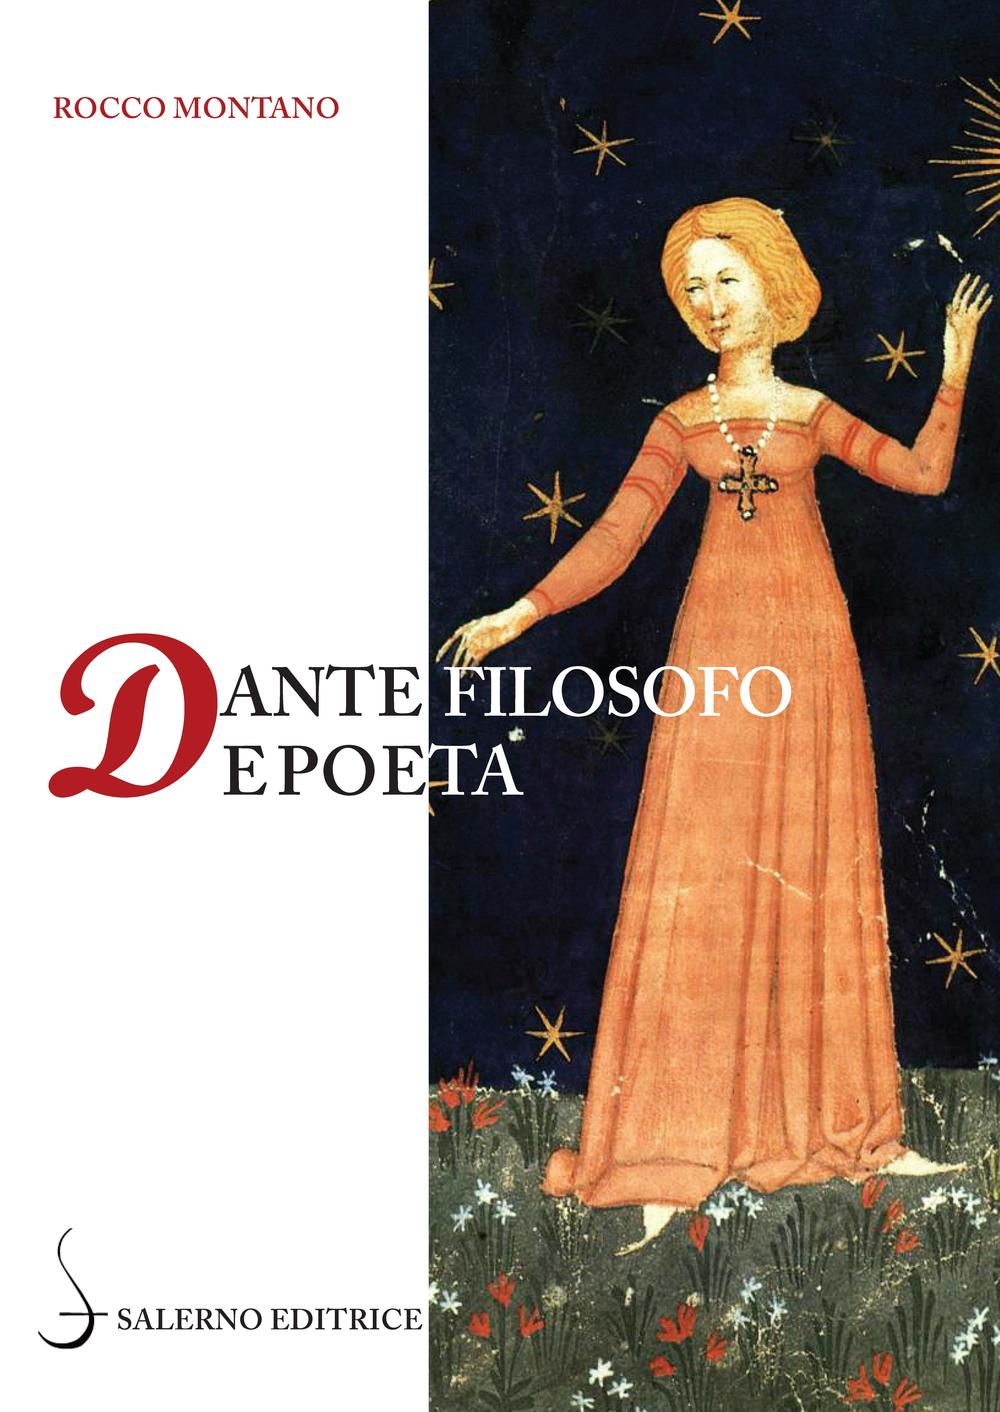 Image of Dante filosofo e poeta